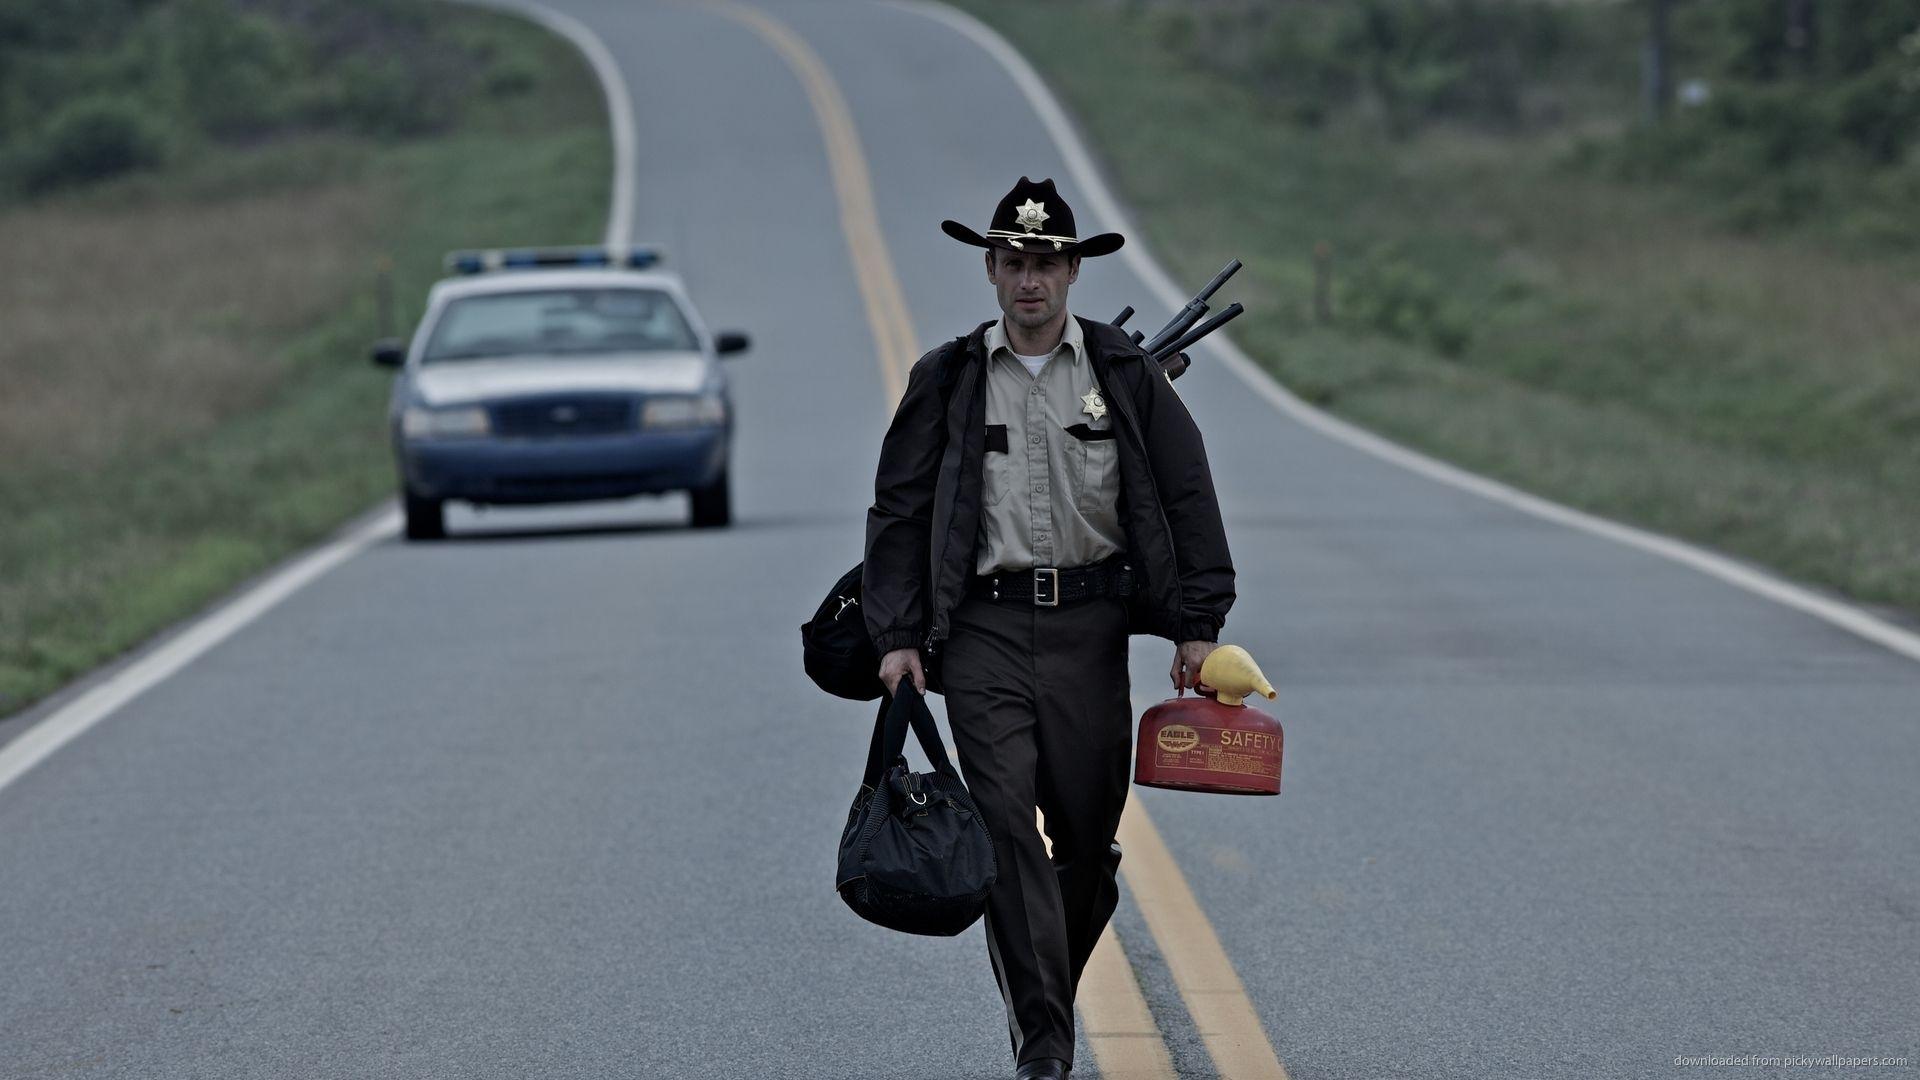 Download 1920x1080 The Walking Dead Sheriff Walking On The Road